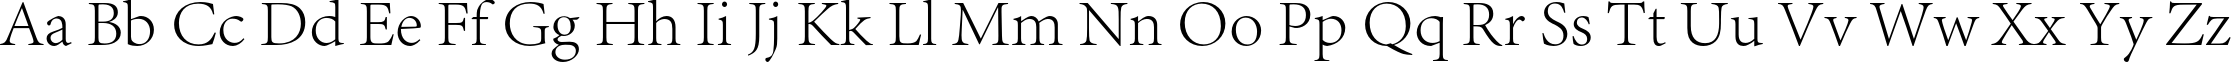 Пример написания английского алфавита шрифтом Adobe Song Std L